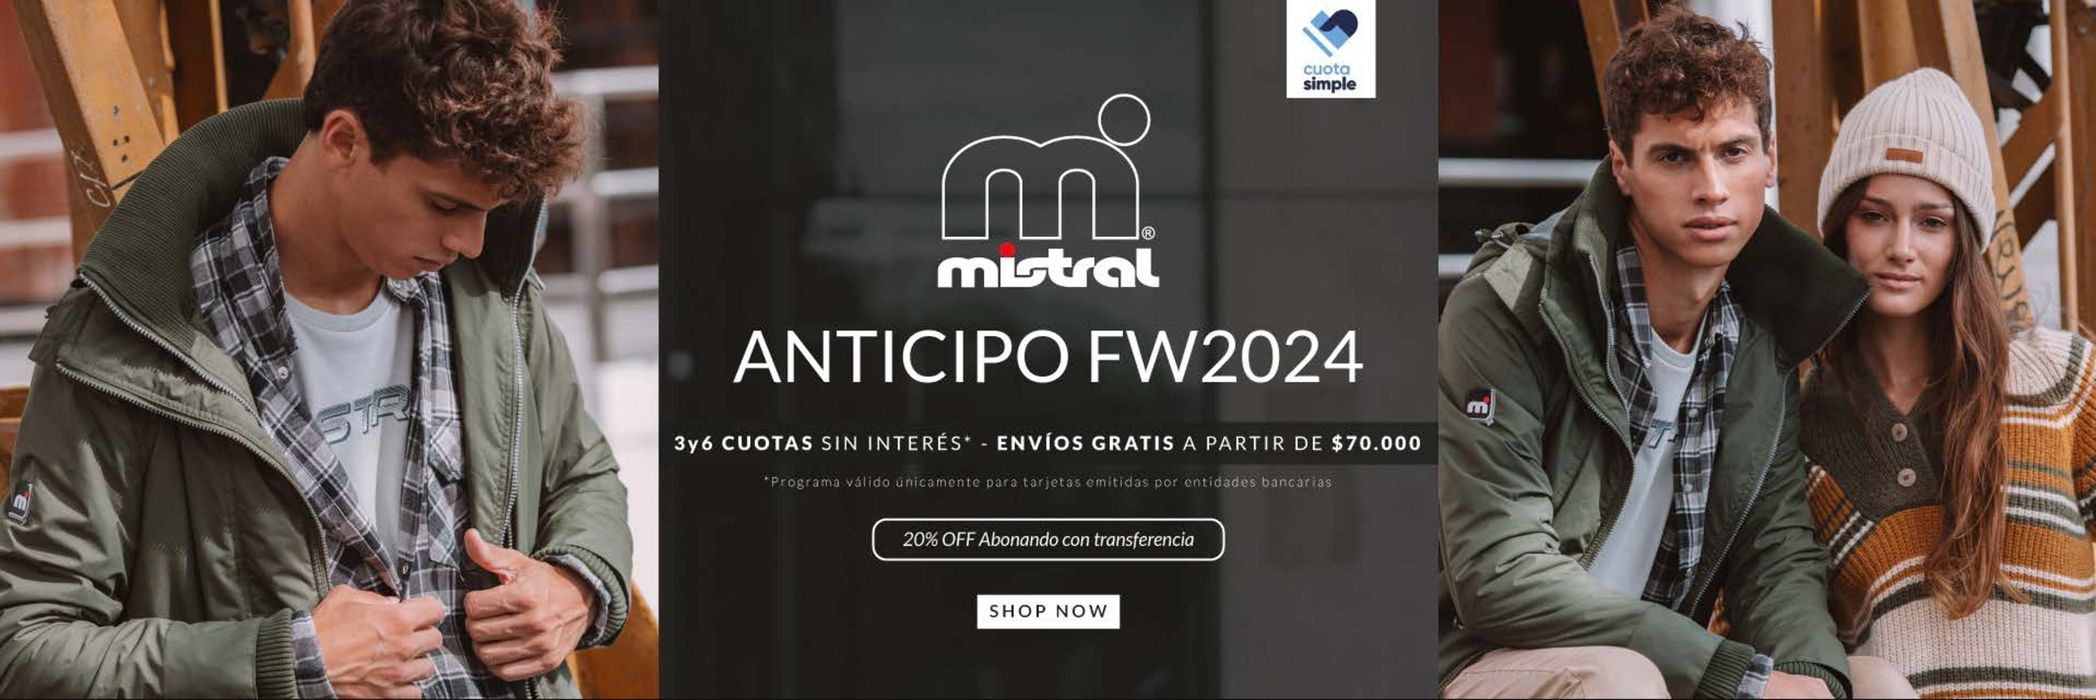 Catálogo Mistral en Buenos Aires | Anticipo FW2024 20% OFF con transferencia | 29/3/2024 - 29/4/2024